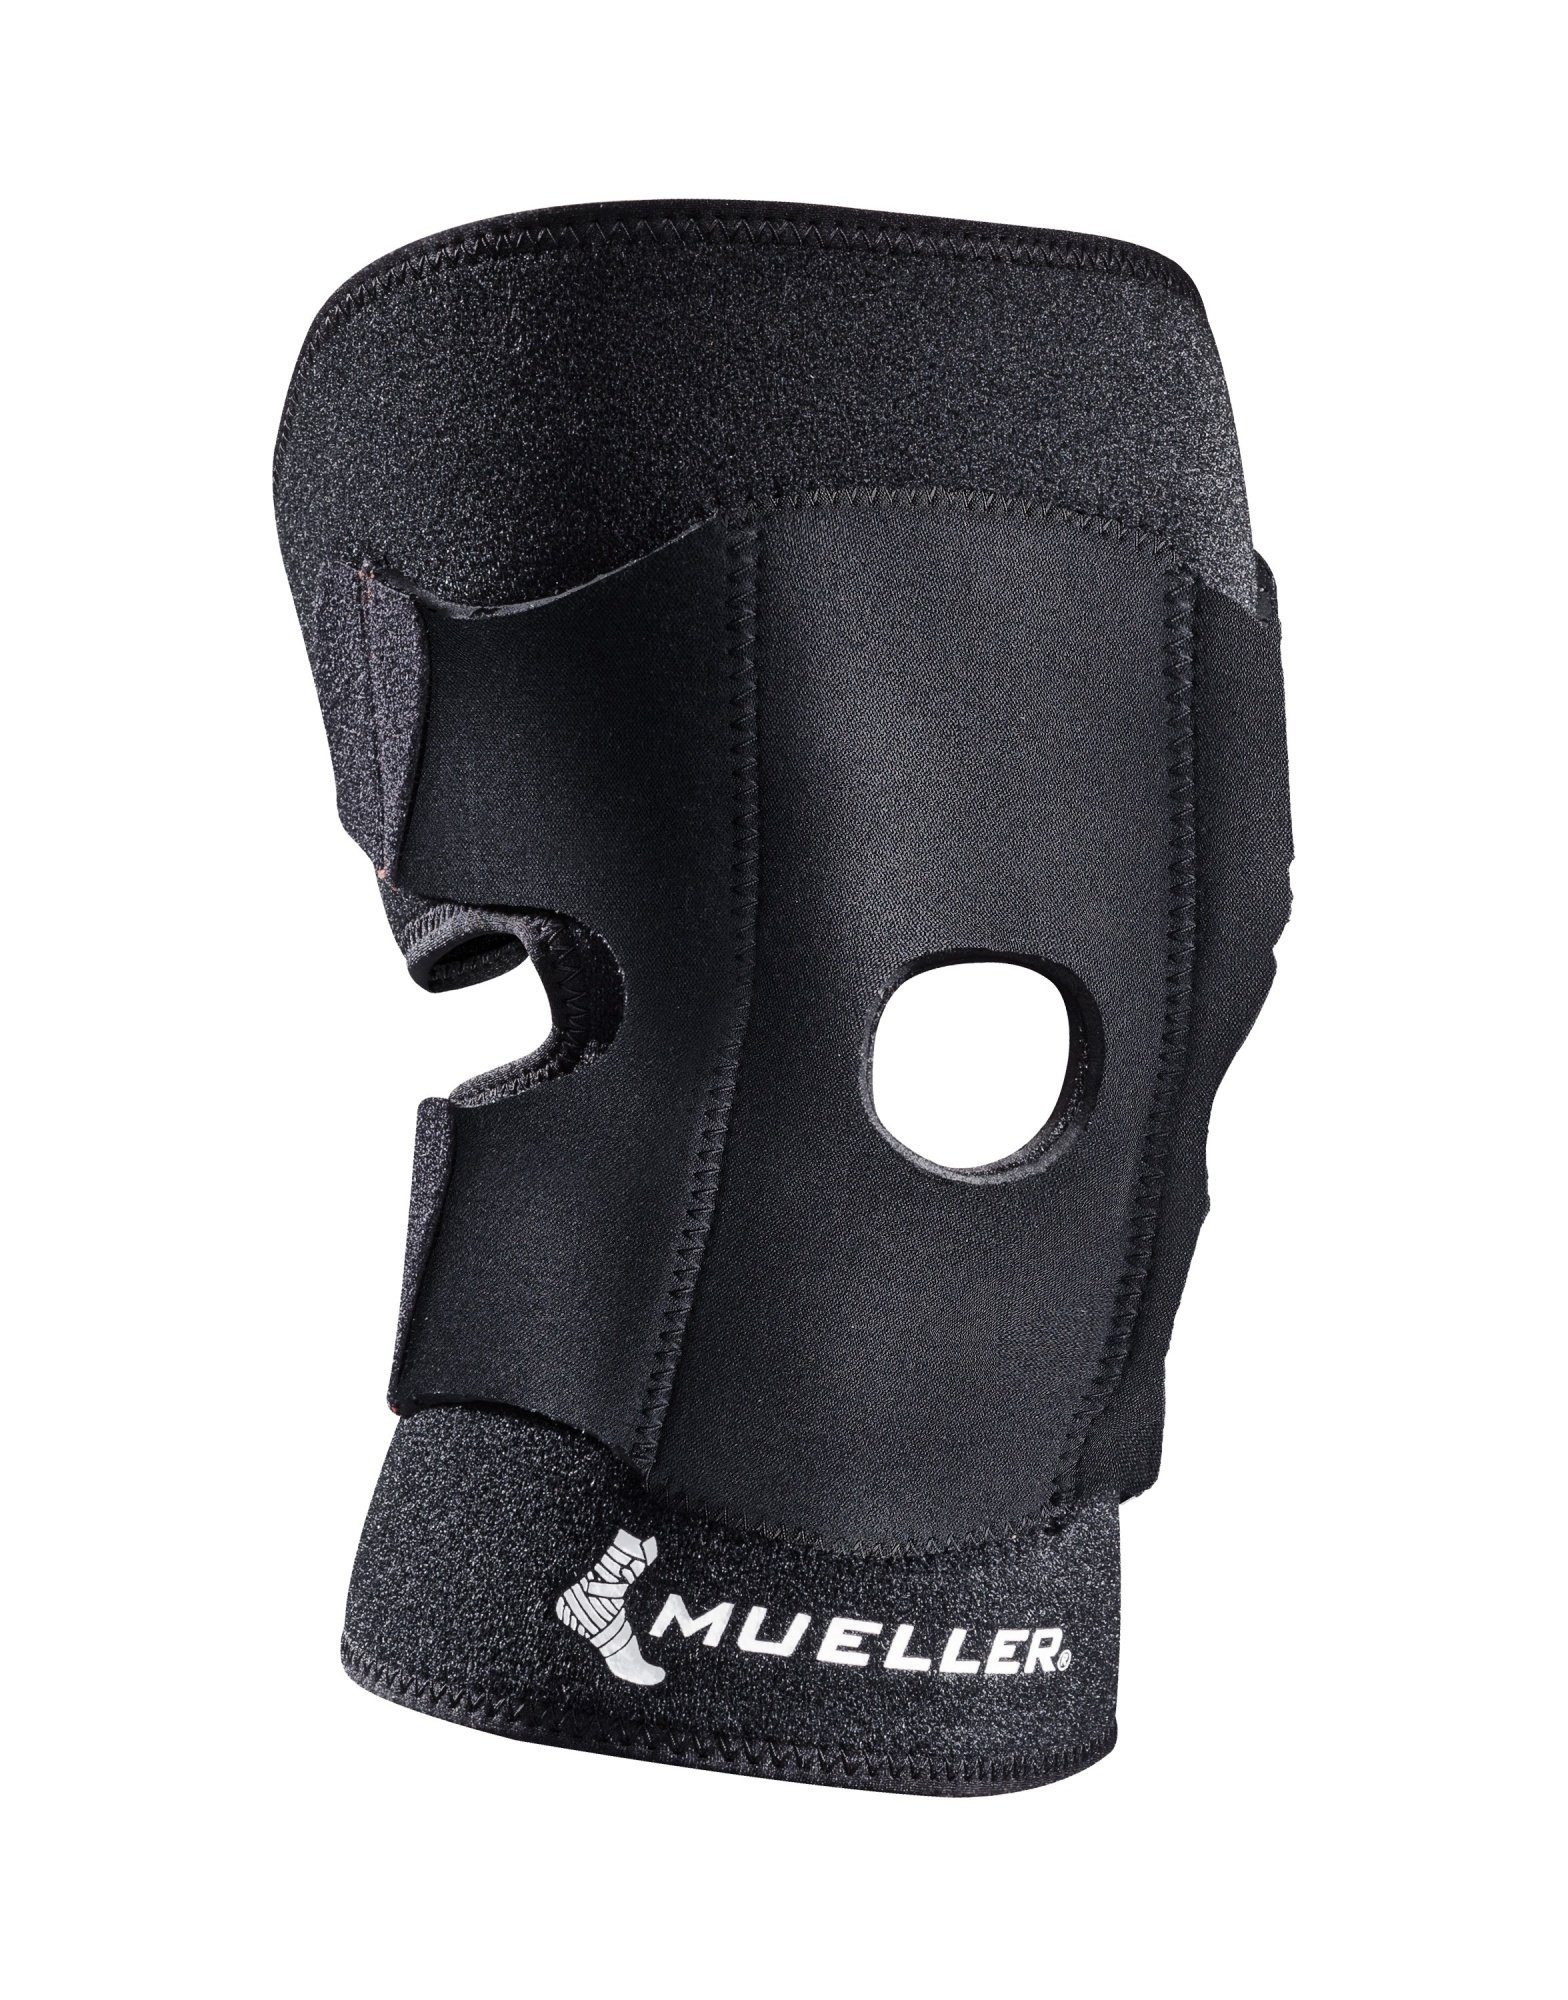 Mueller Sports Medicine Kniebandage Adjustable Knee Support, Universalgröße